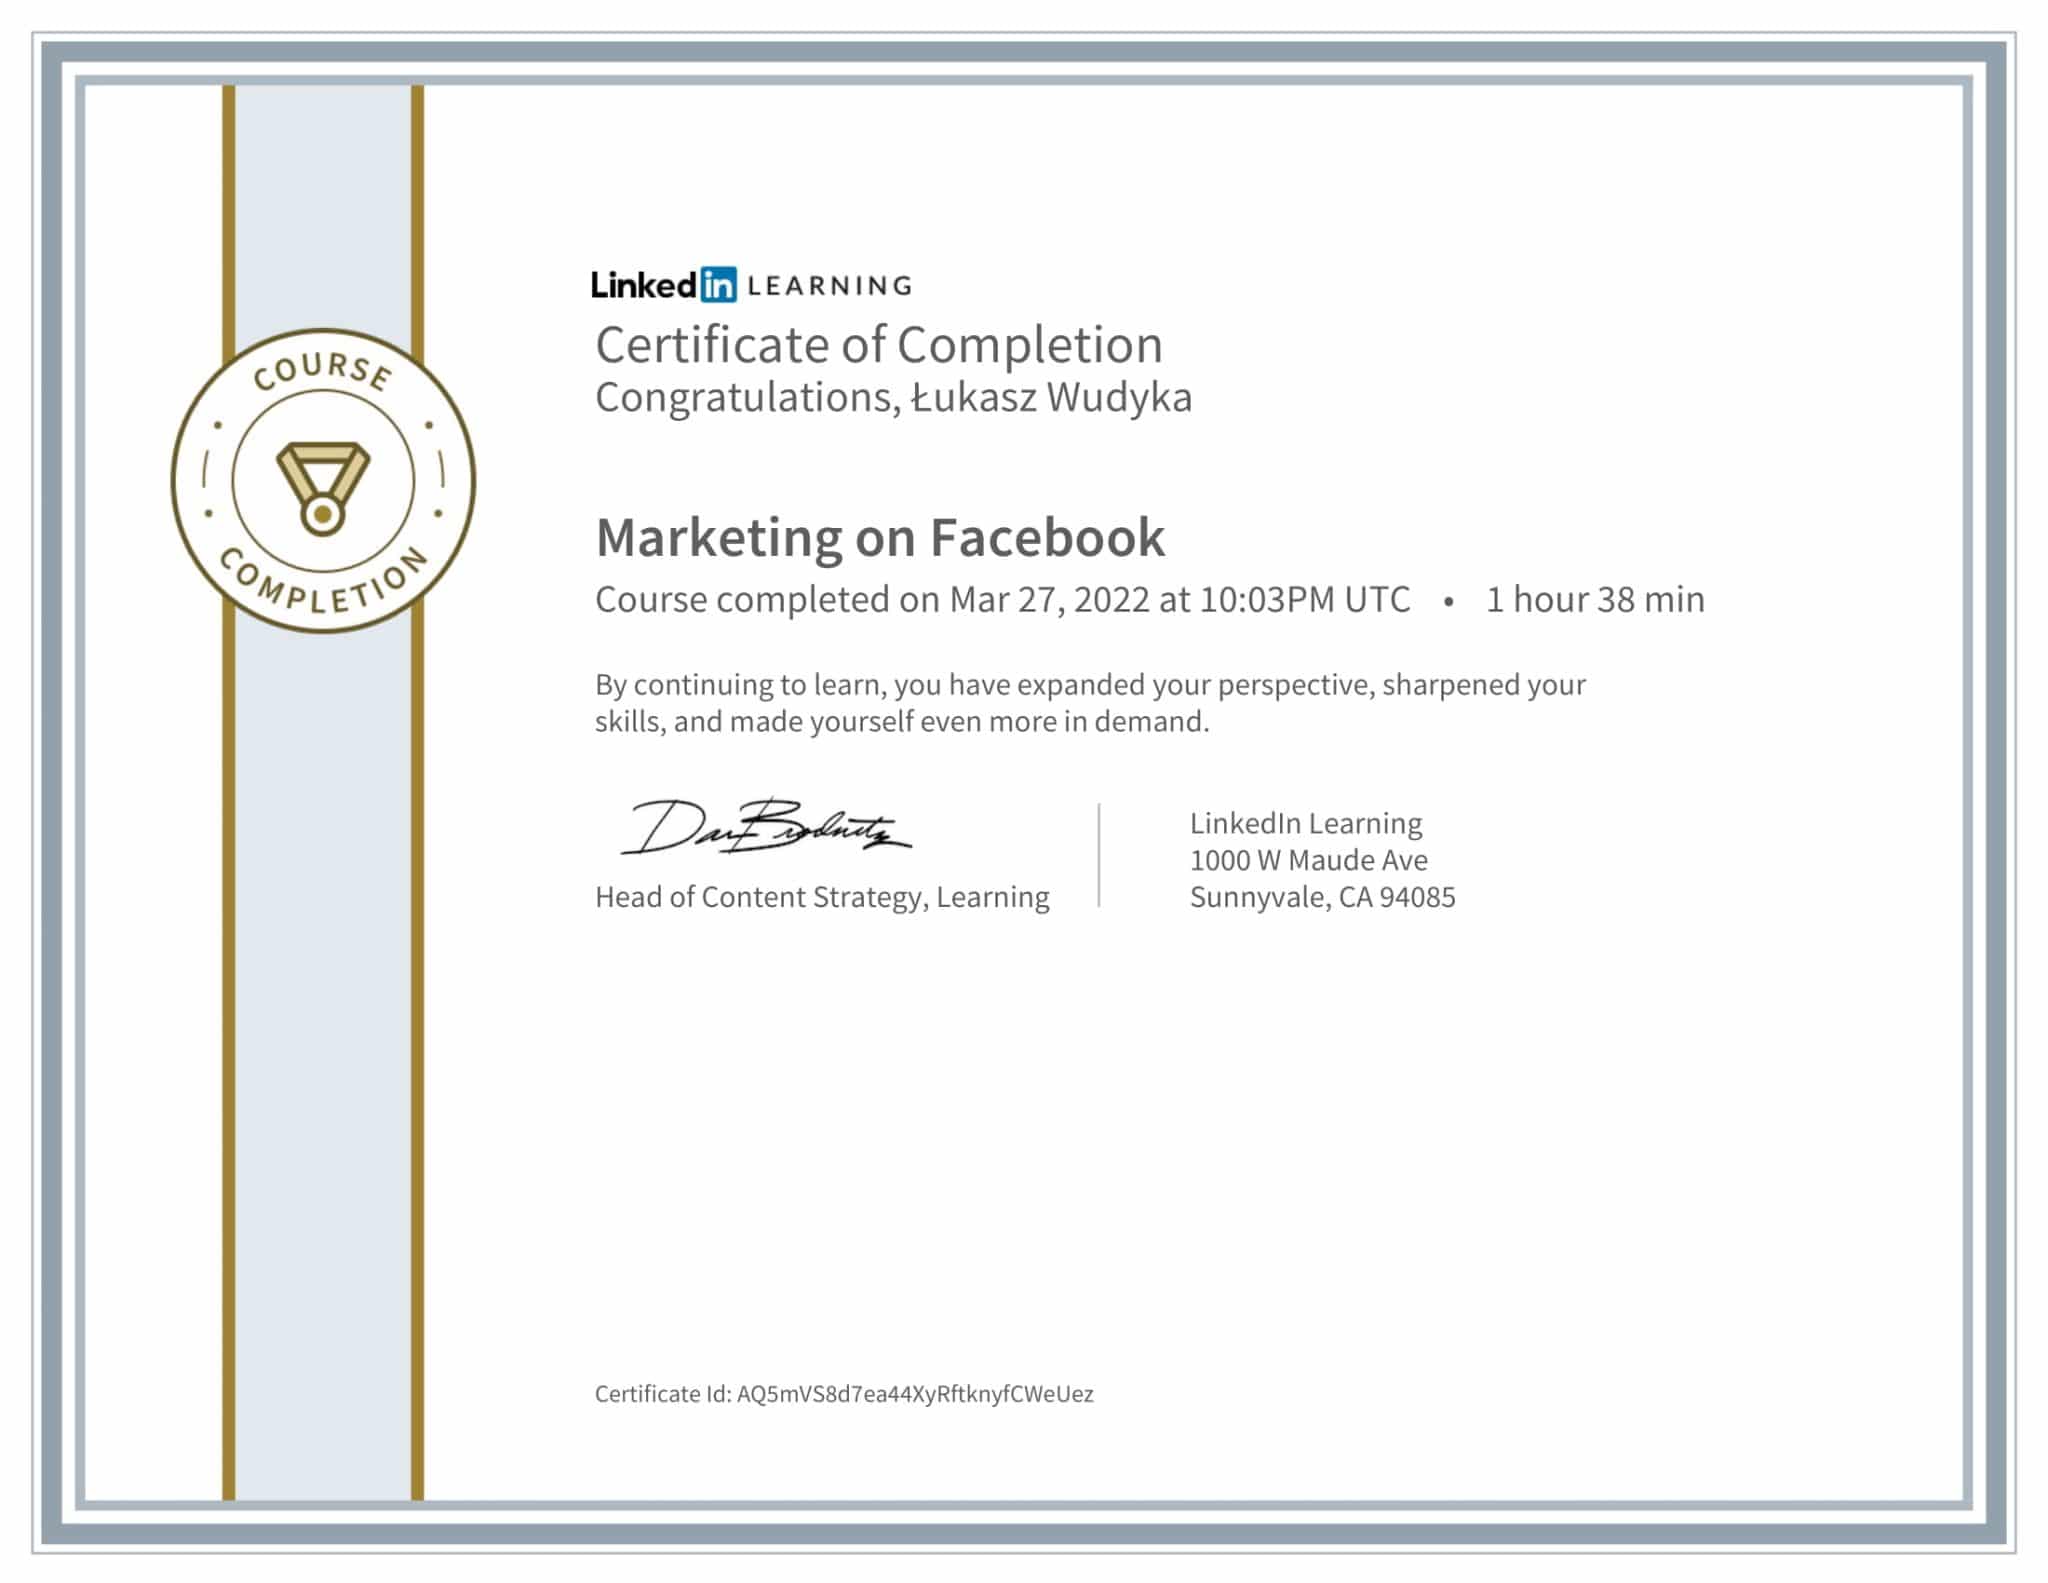 CertificateOfCompletion_Marketing on Facebook-1